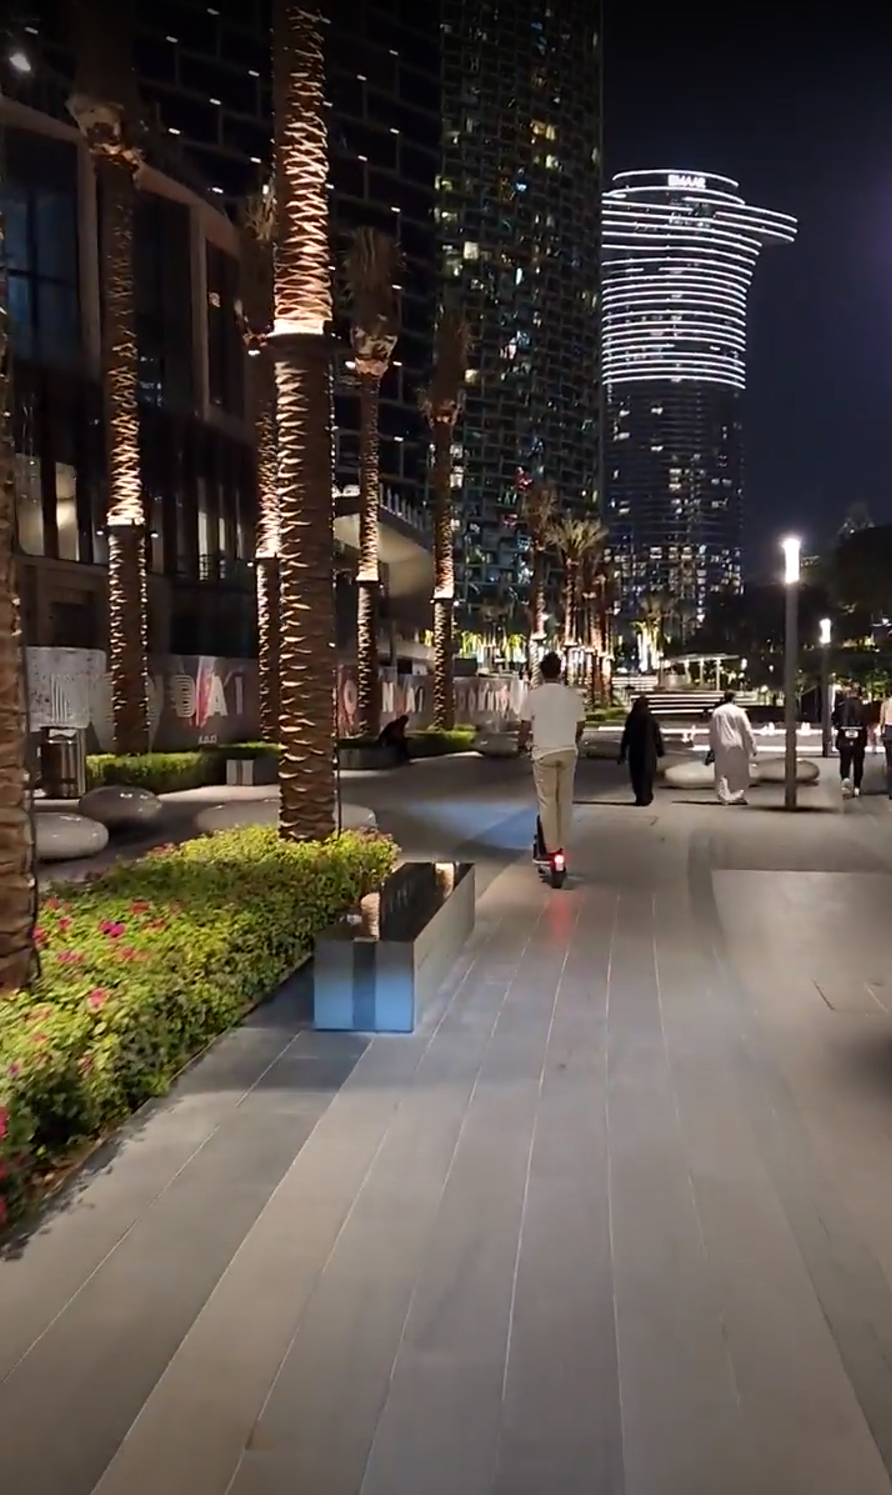 Lime bike ride through the lighted streets of Dubai